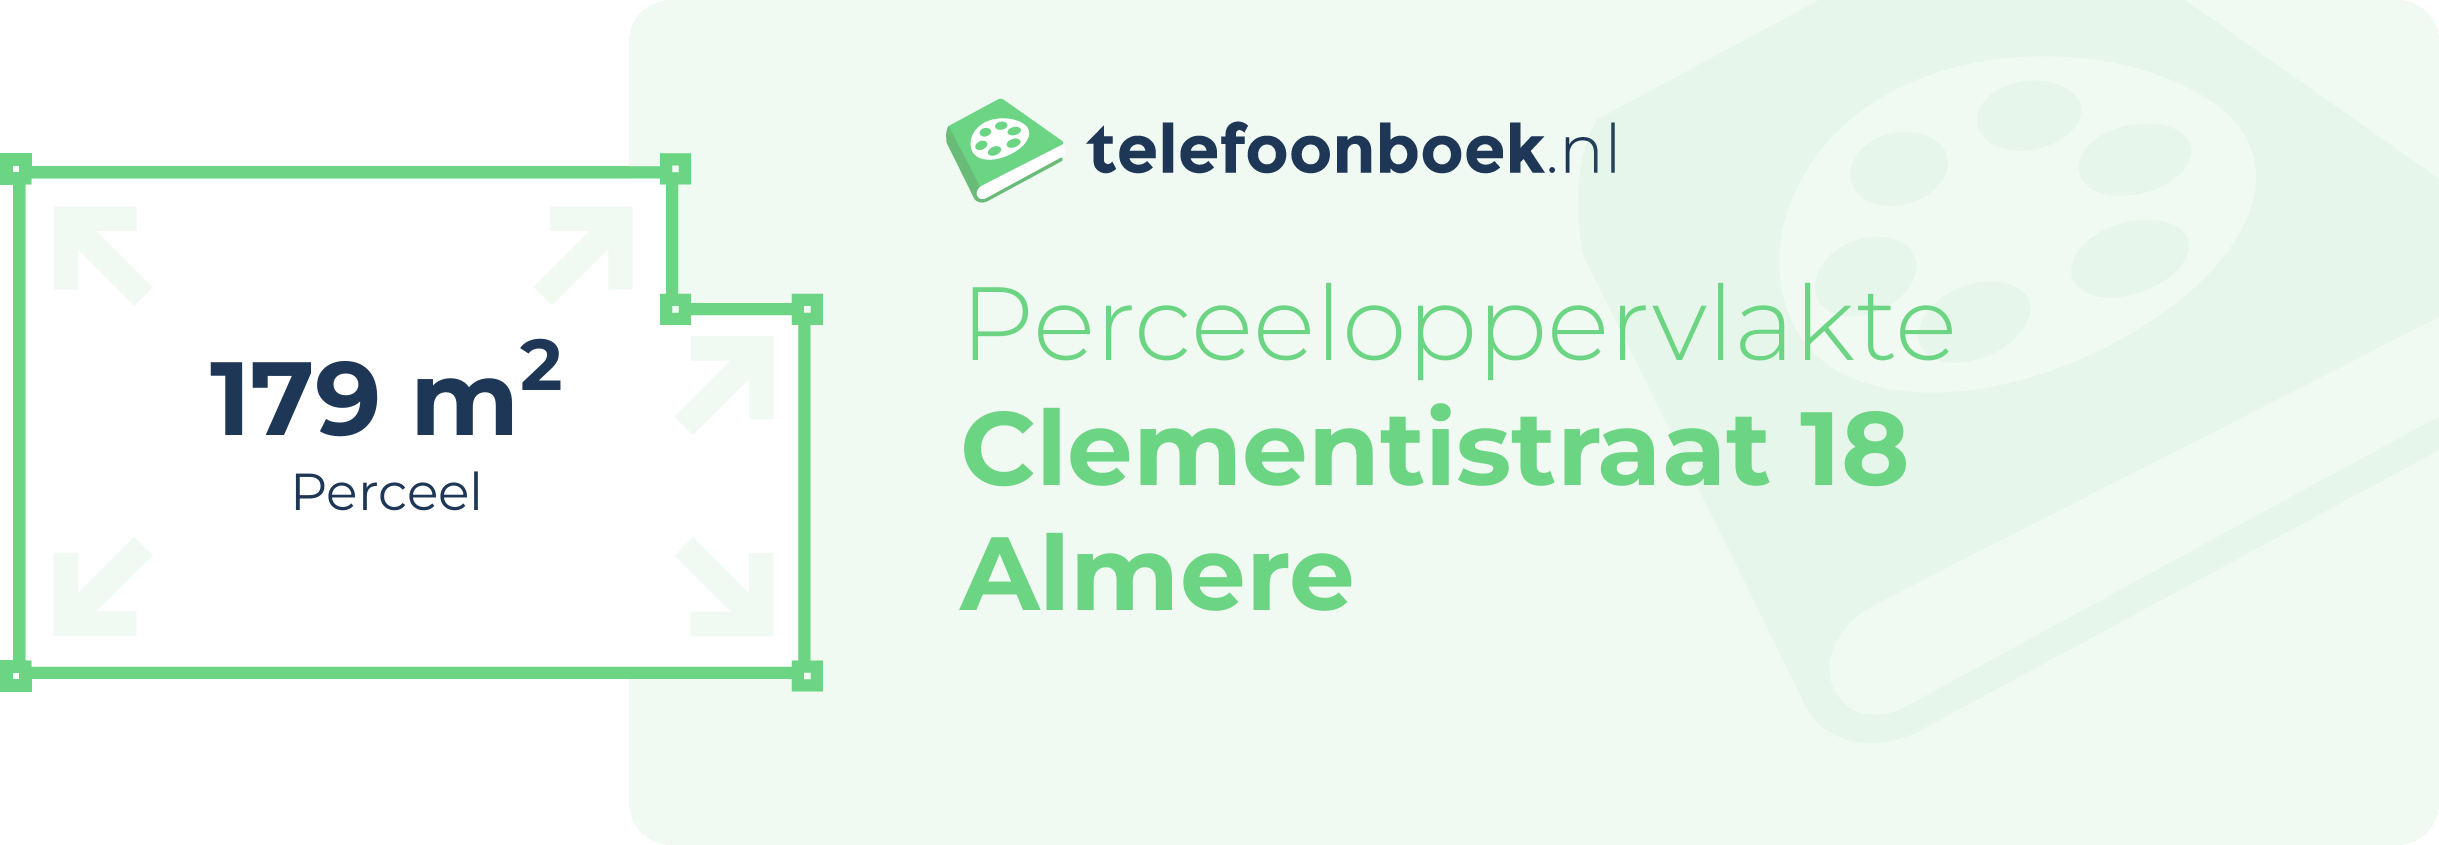 Perceeloppervlakte Clementistraat 18 Almere